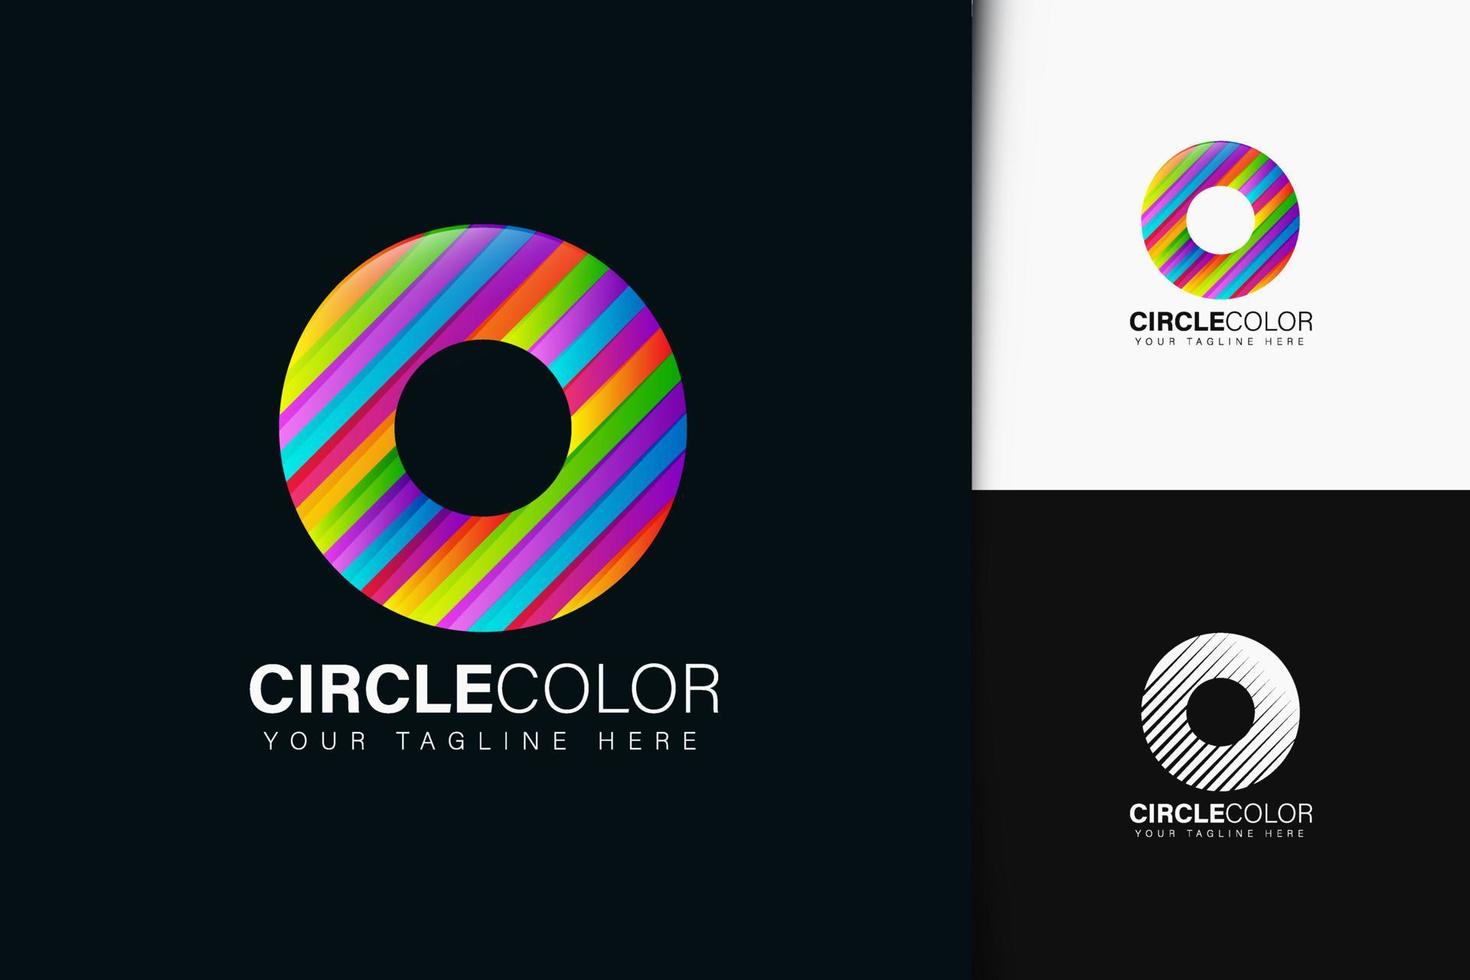 Circle color logo design with gradient vector